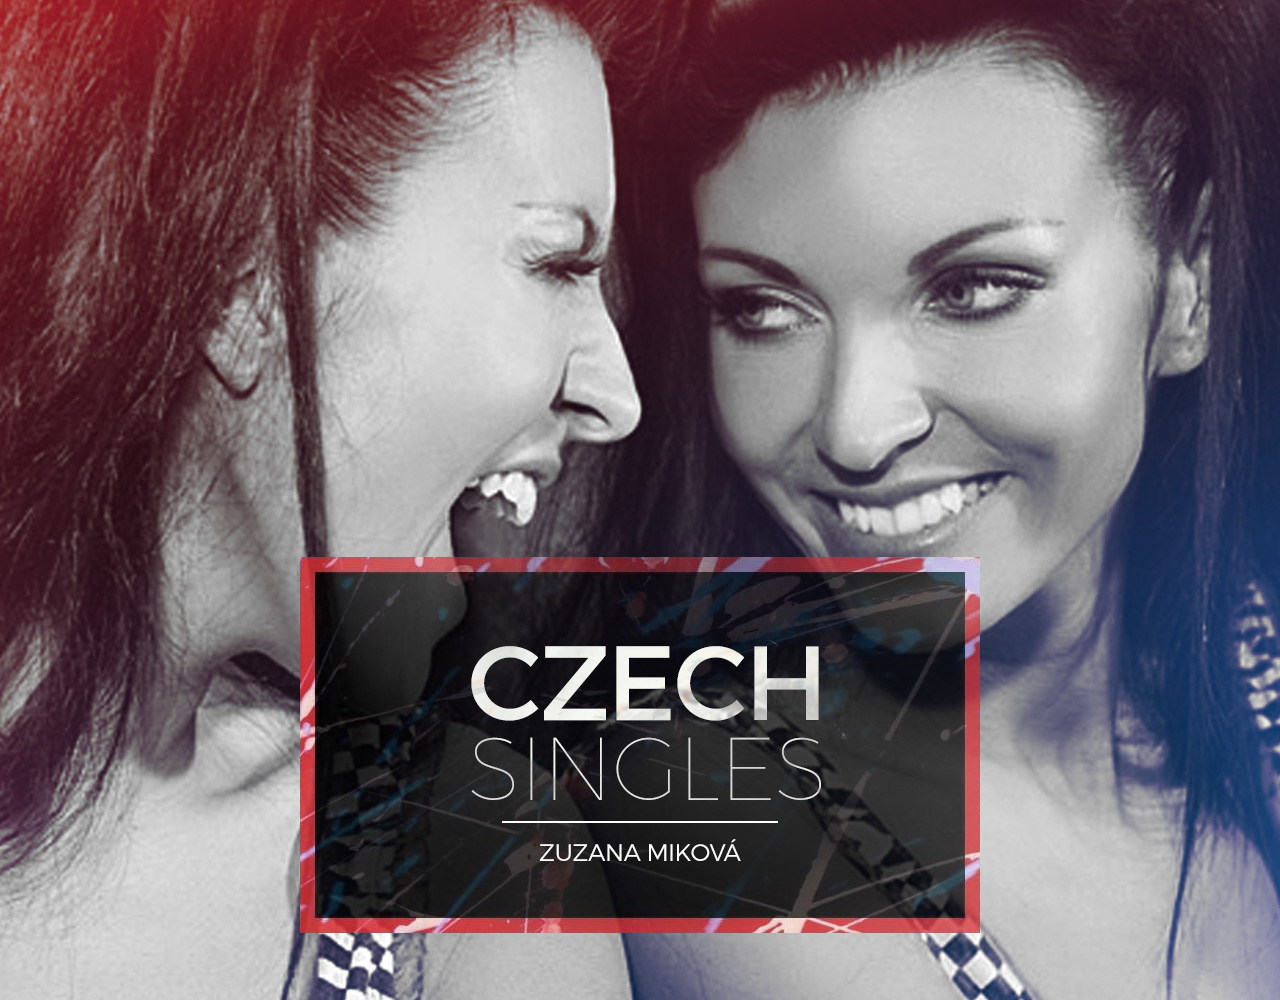 Czech singles